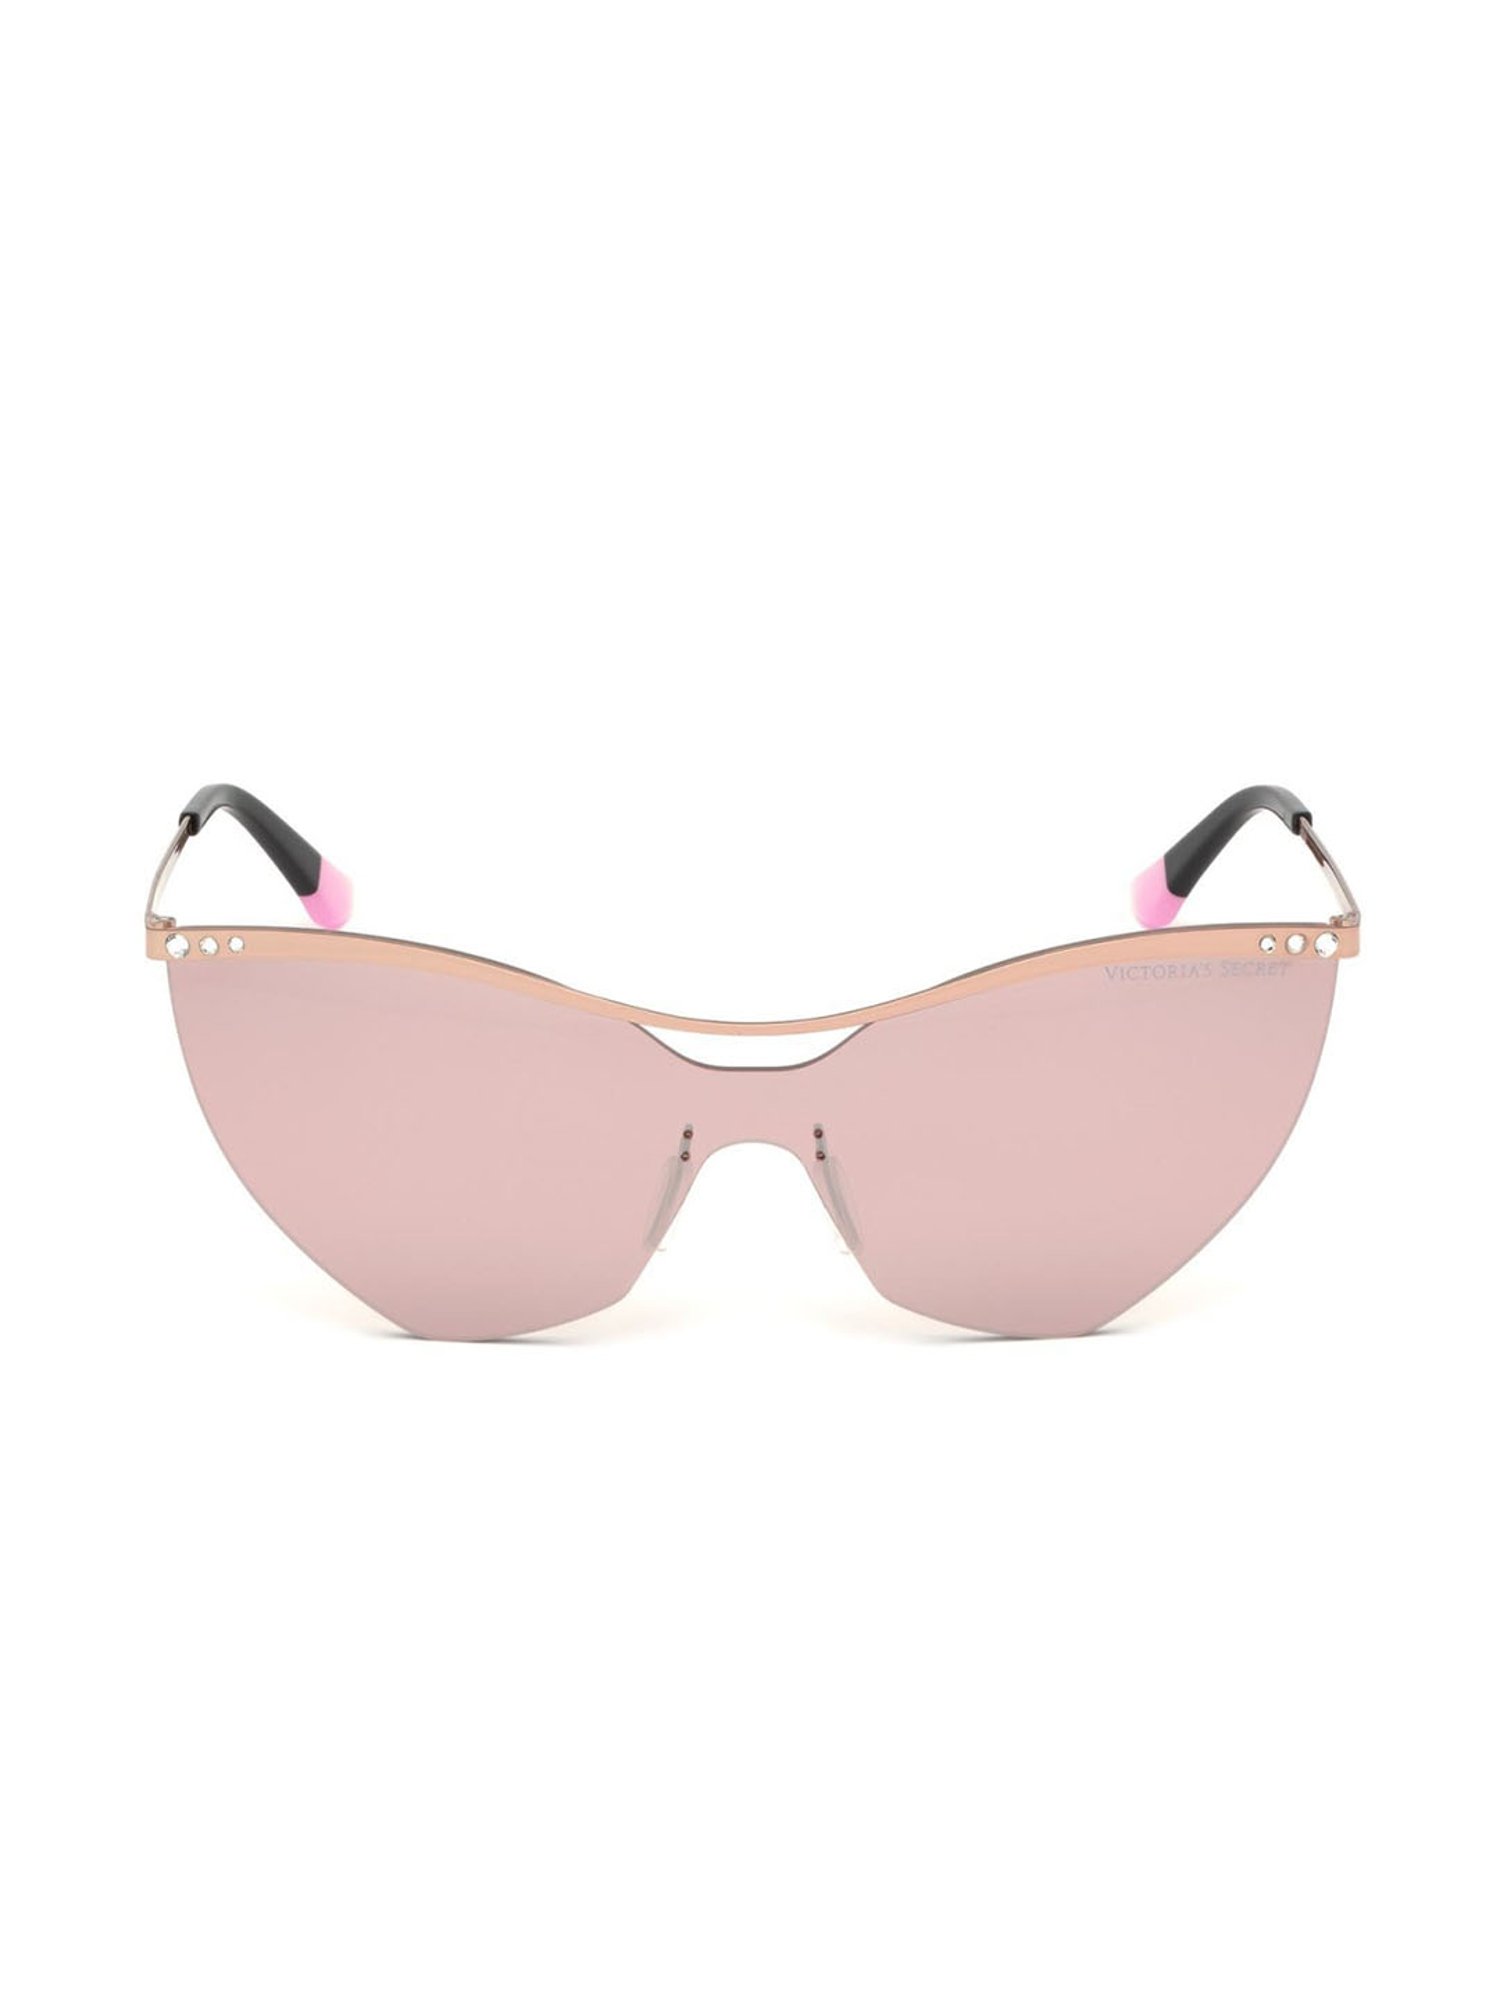 Buy Victoria's Secret Pink Cat Sunglasses for Women Online At Best Price @ Tata CLiQ